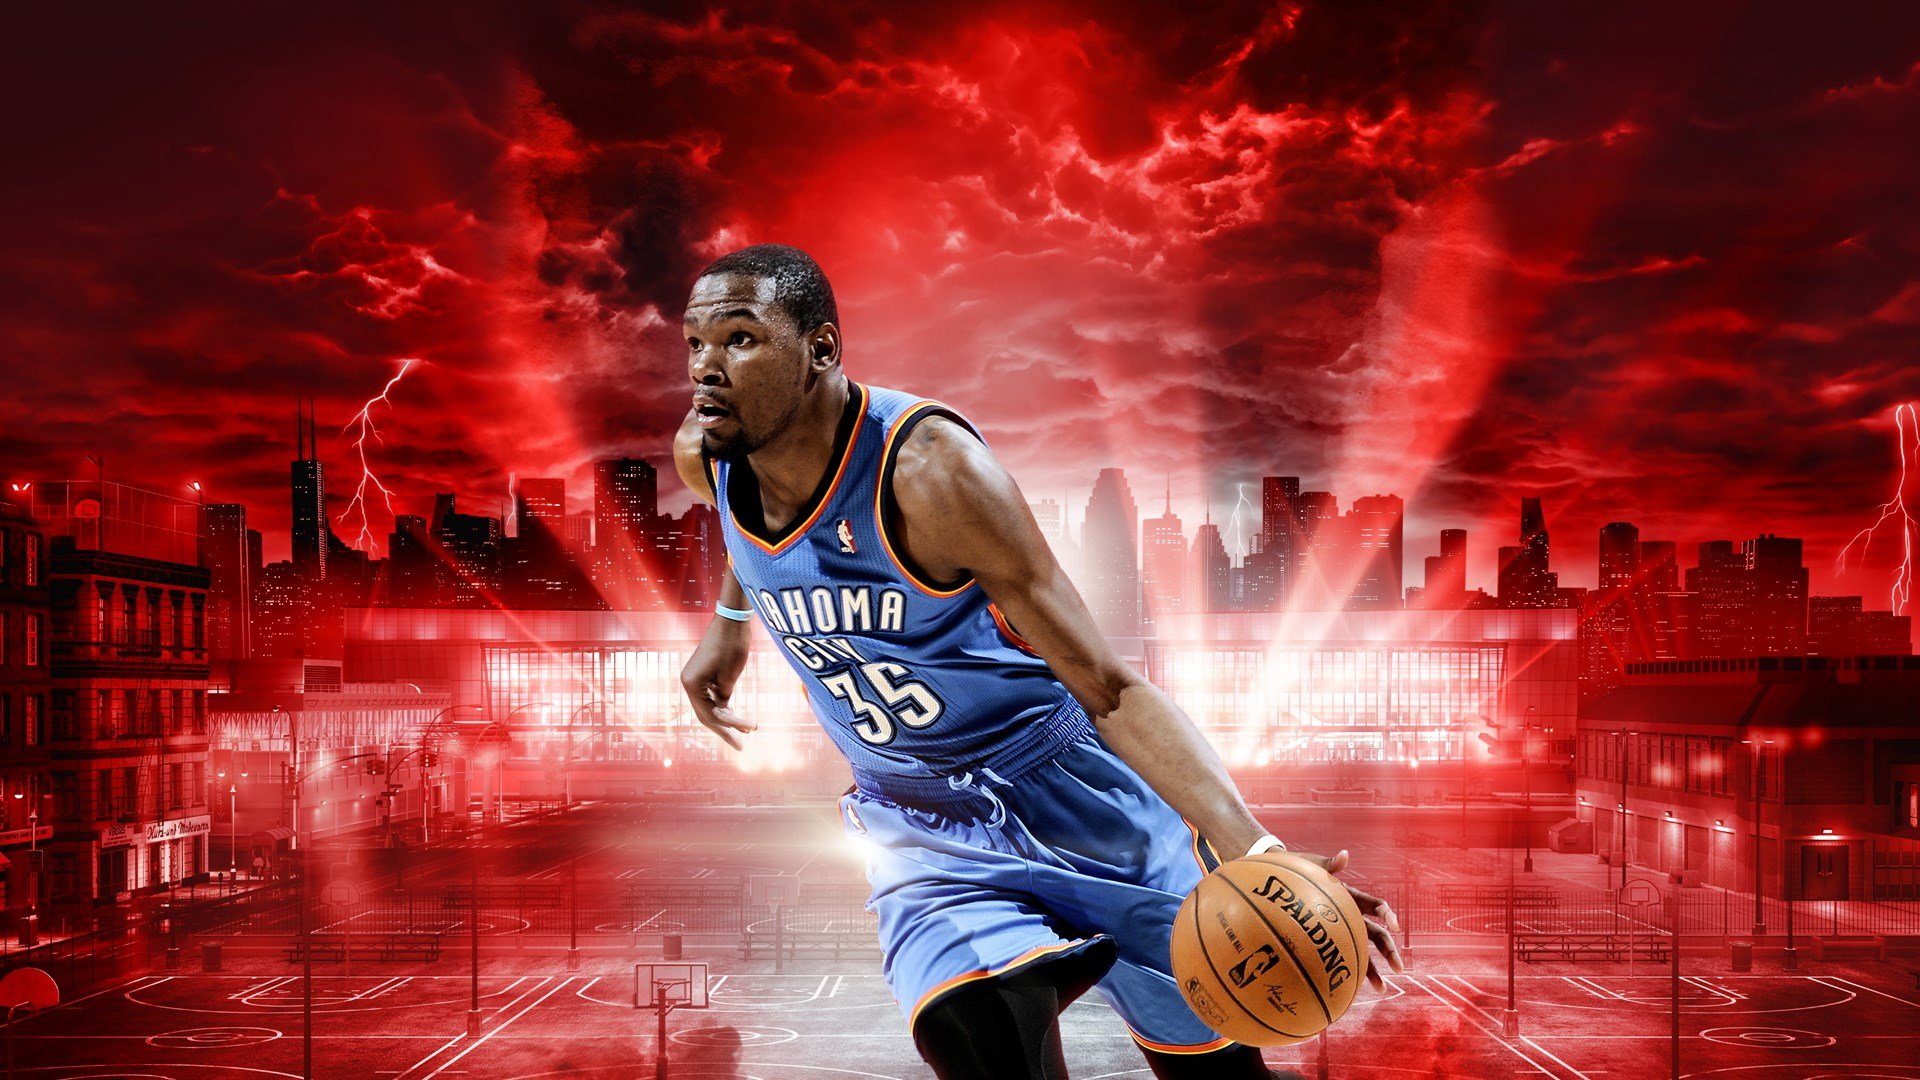 NBA 2K15 cover image